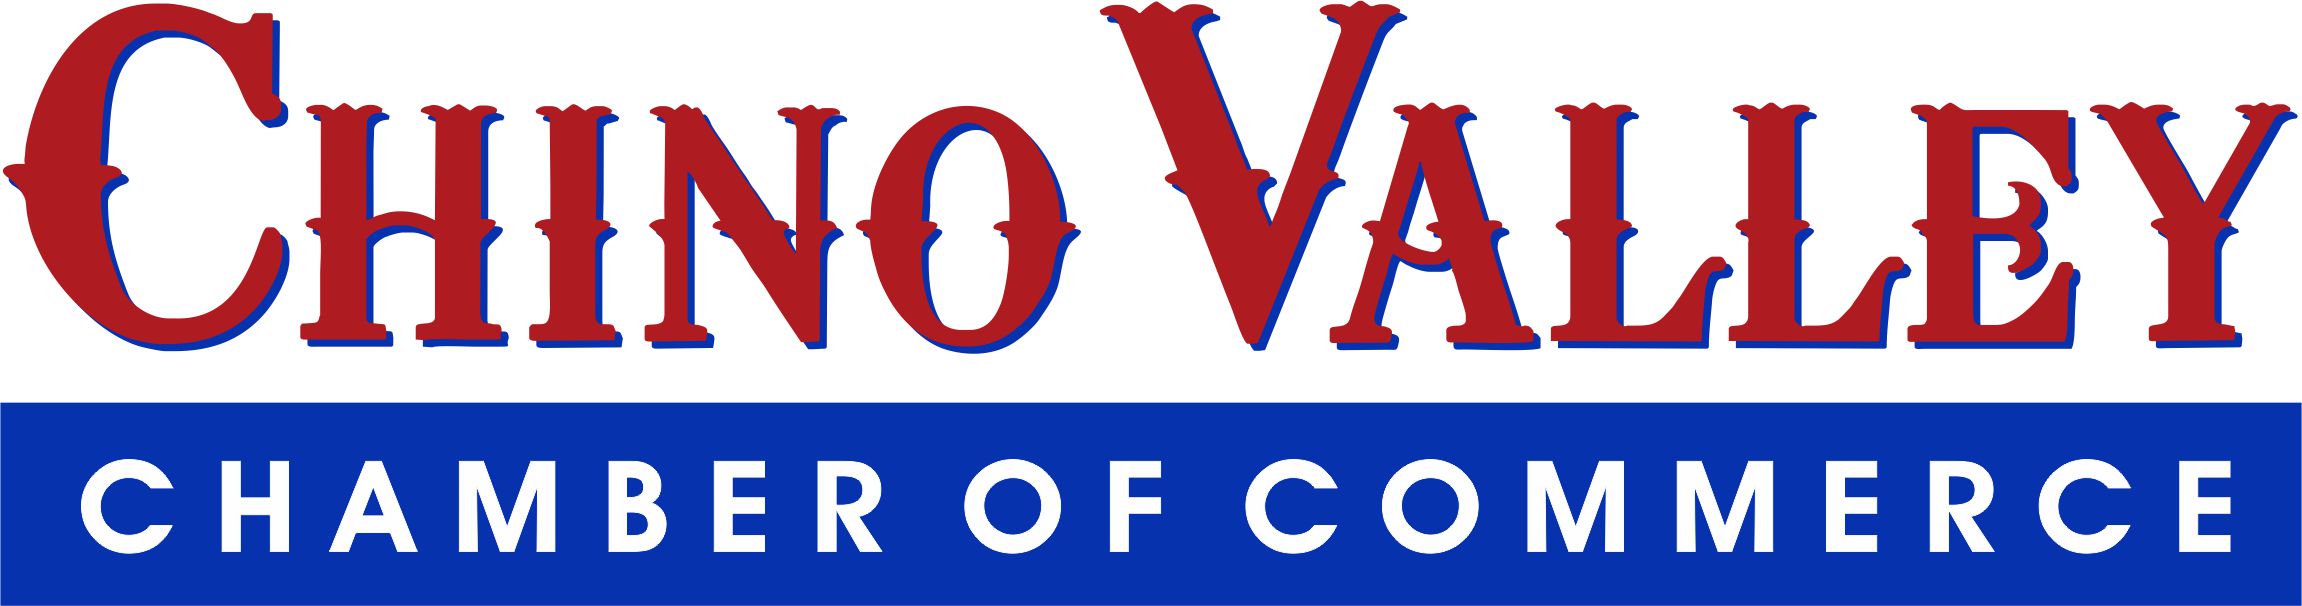 Chino Valley Chamber of Commerce logo